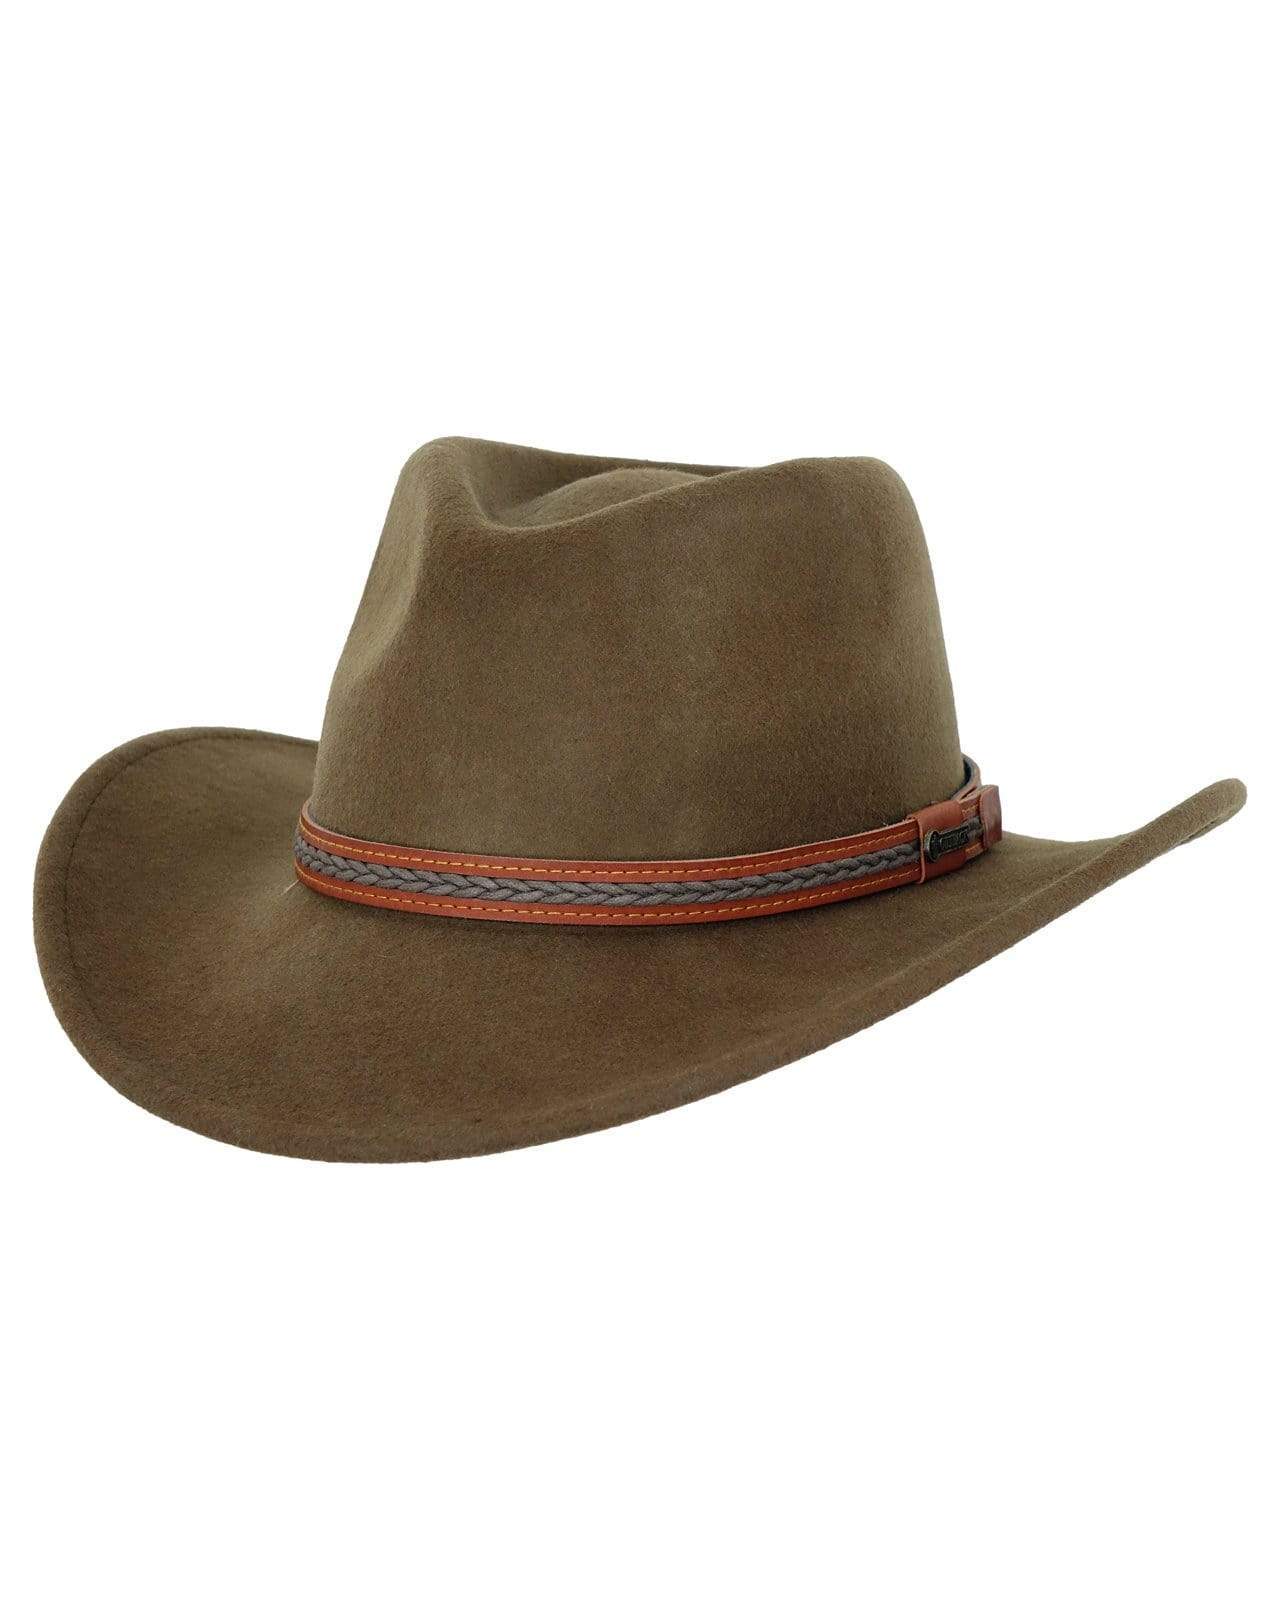 MIX BROWN Cowboy Hat for Men Western Hats for Women 100% Australian Wool  Cowgirl Hat Felt Outback Fedora Hat Wide Brim